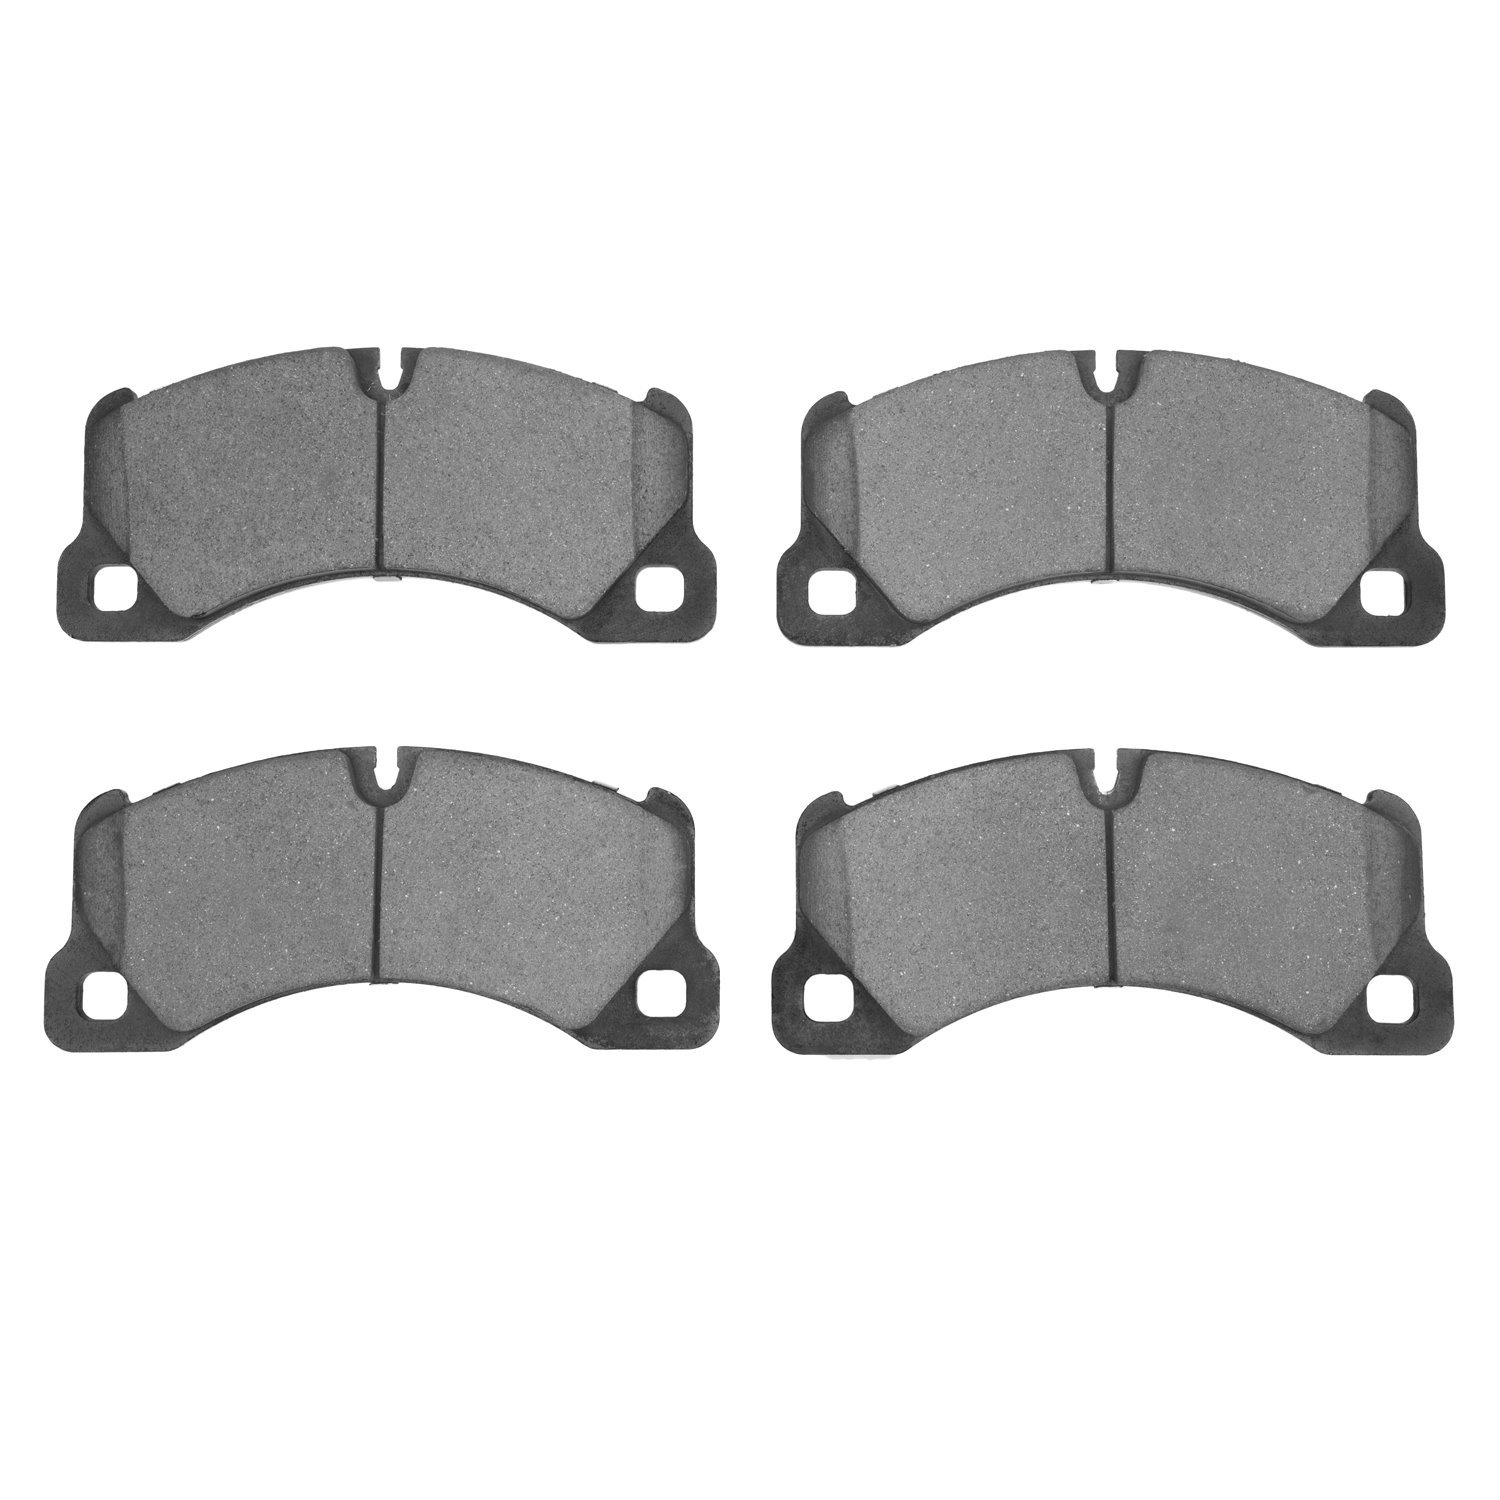 1310-1349-00 3000-Series Ceramic Brake Pads, 2008-2021 Multiple Makes/Models, Position: Front